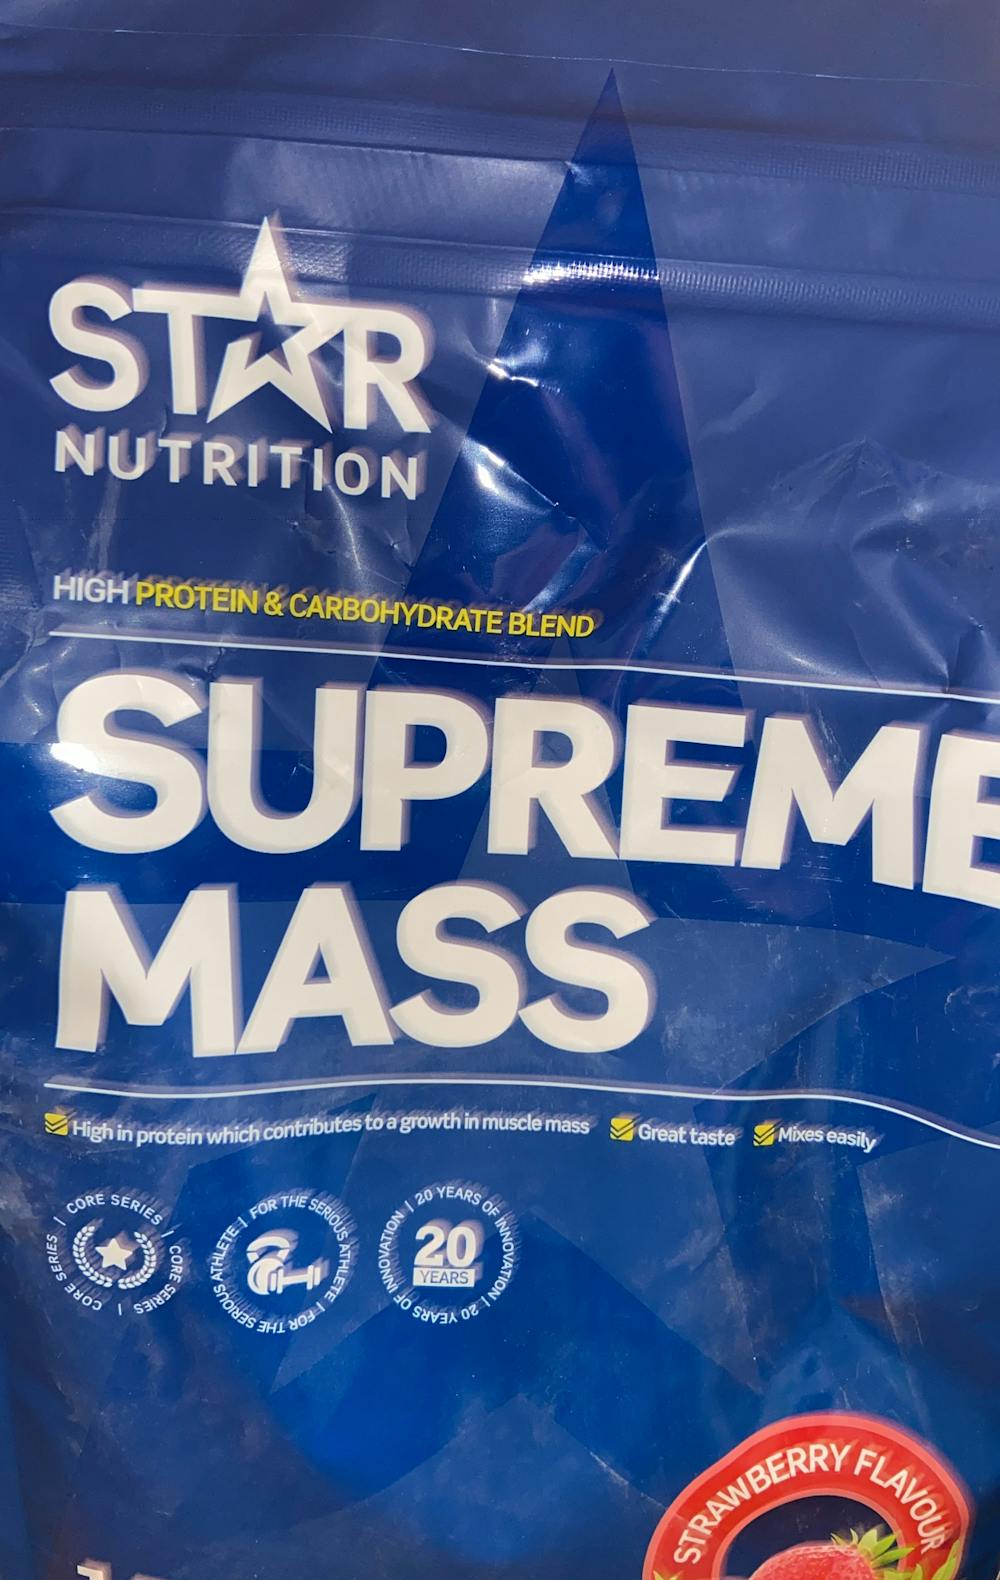 Supreme mass, Star nutrition